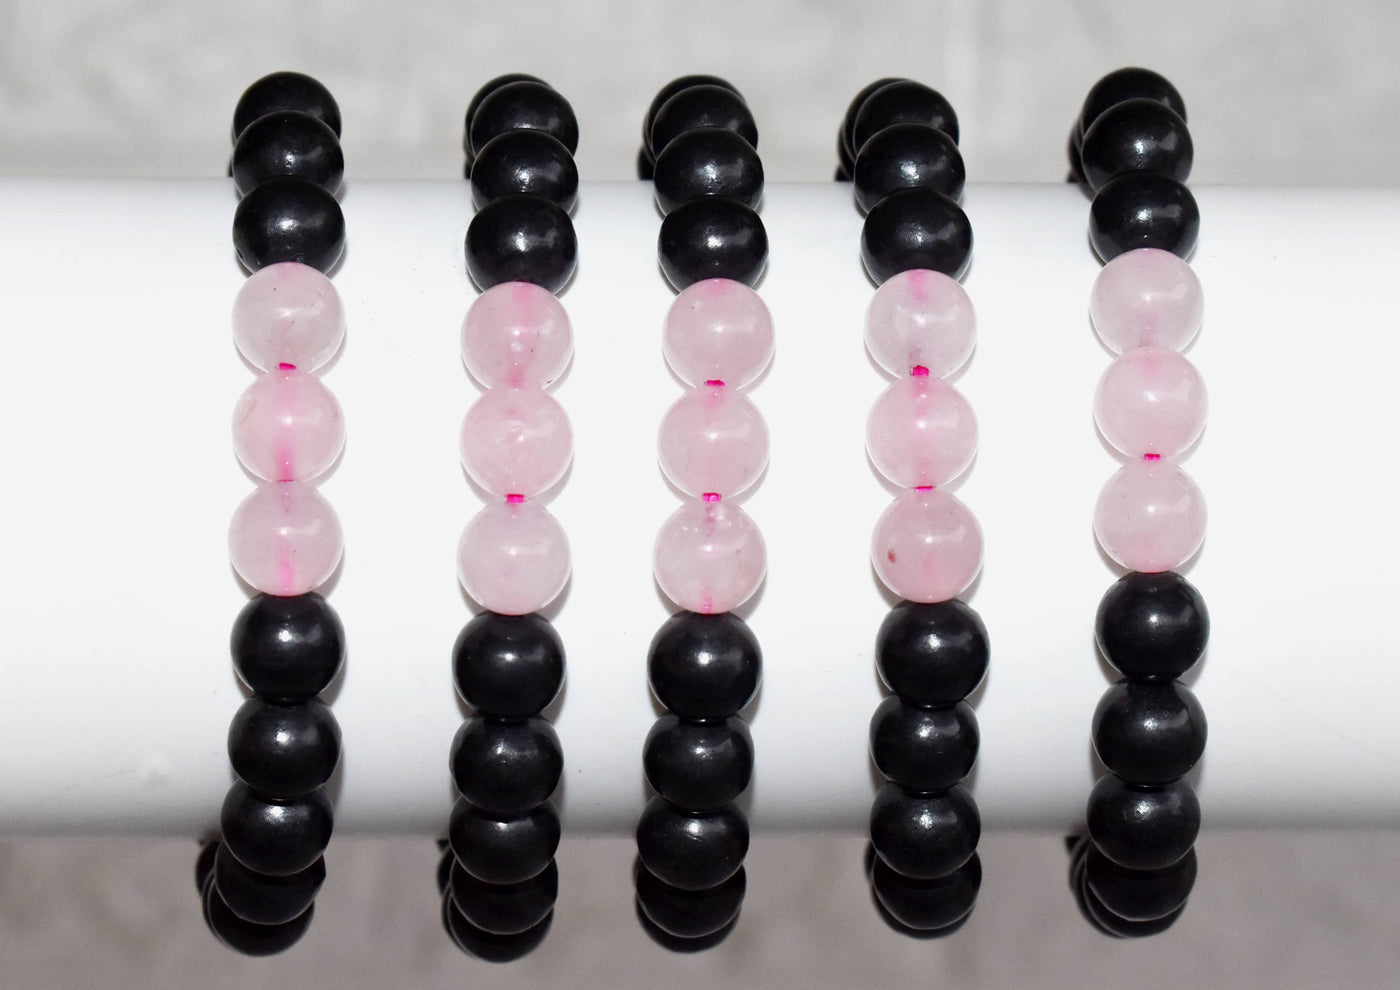 EMF Protection Crystal Bracelet, EMF Bracelet (Shungite Black, Rose Quartz)